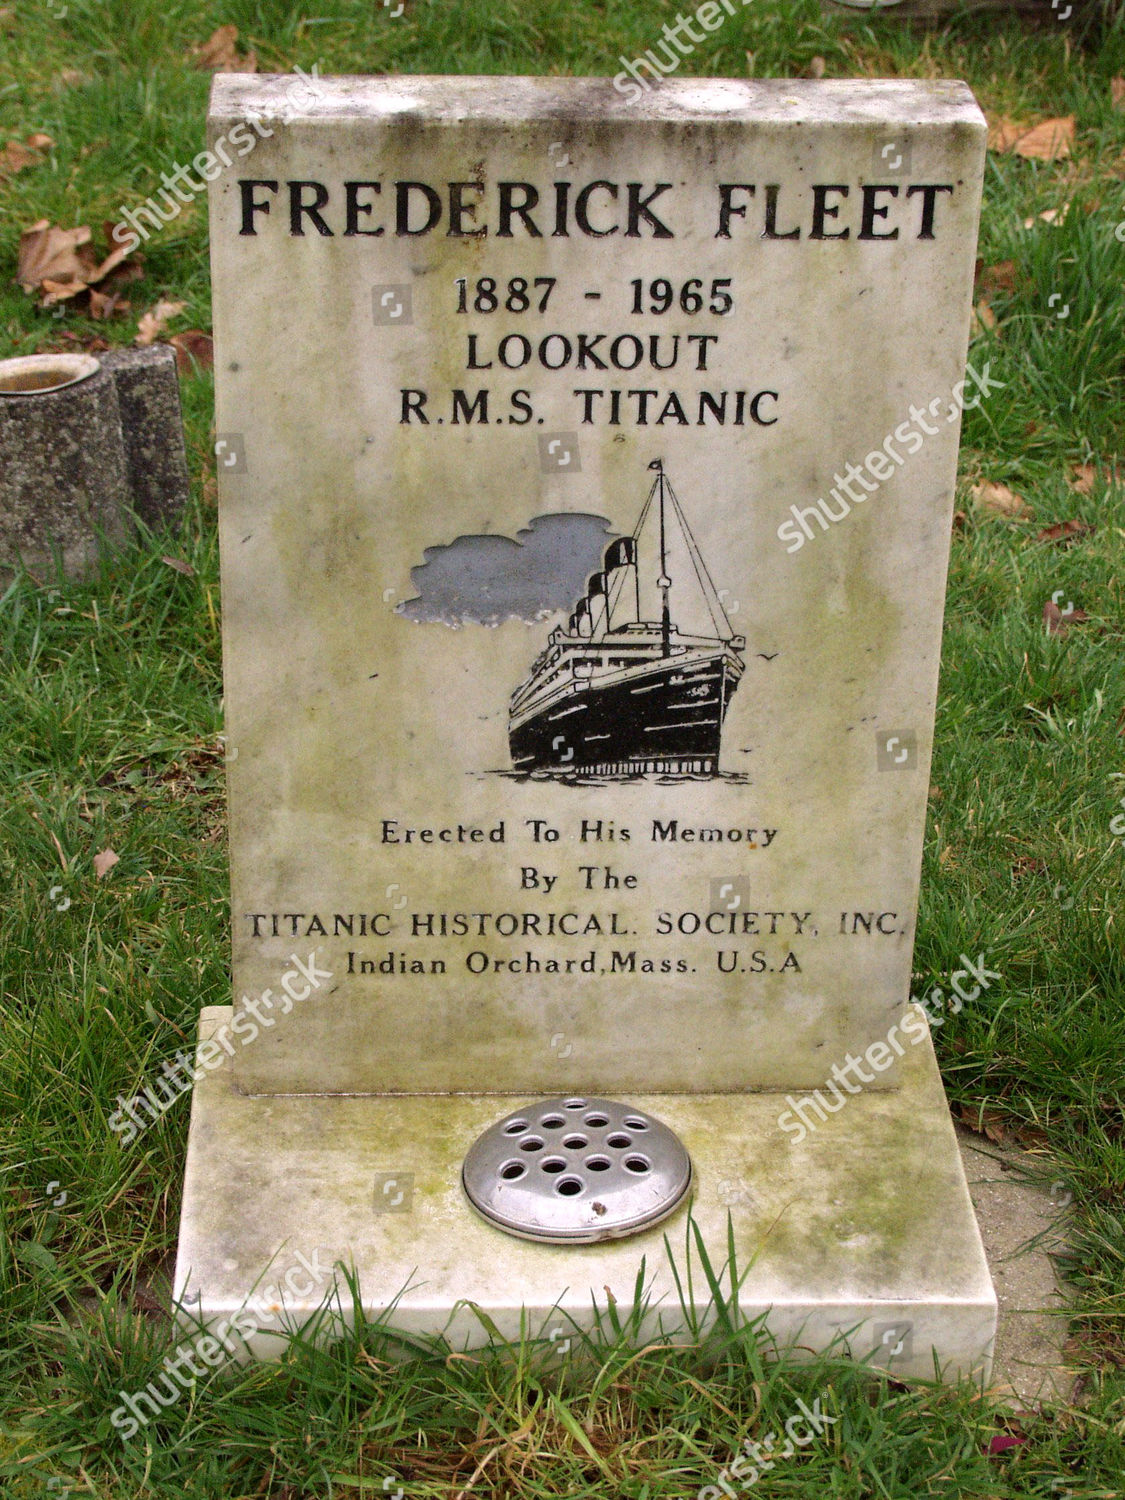 Grave Frederick Fleet Headstone Memorial Titanic